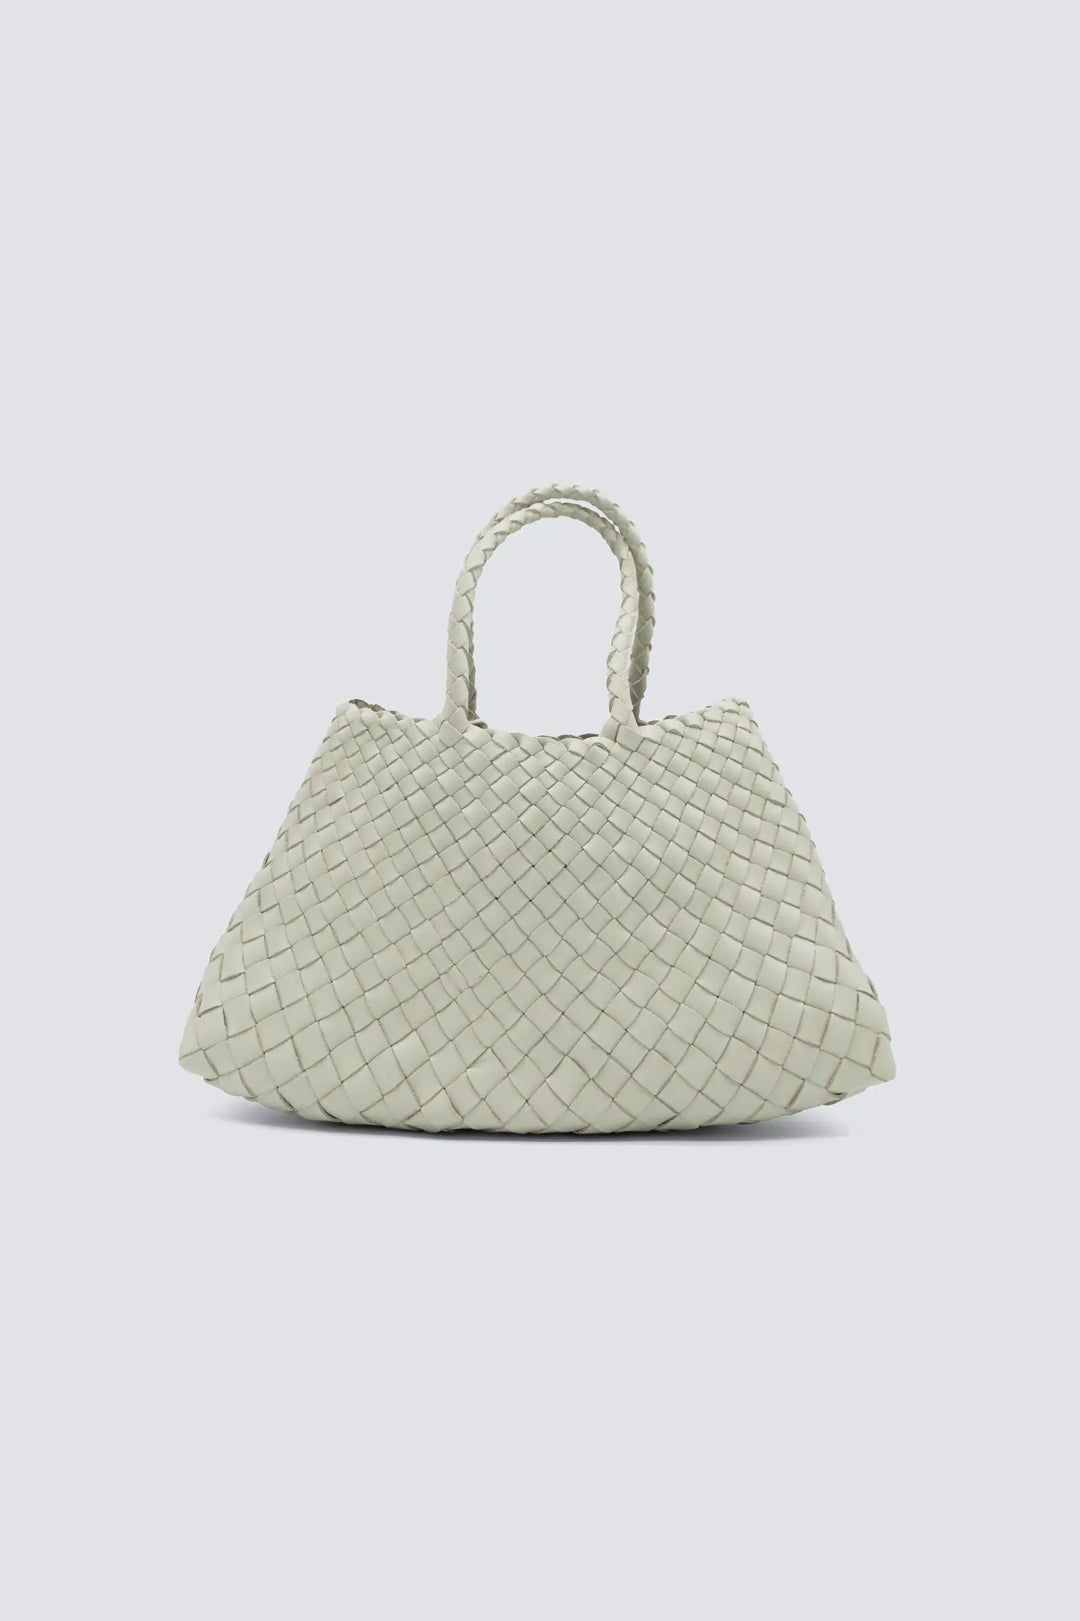 Dragon Diffusion - Woven Leather Bag Handmade - Santa Croce Small Pearl